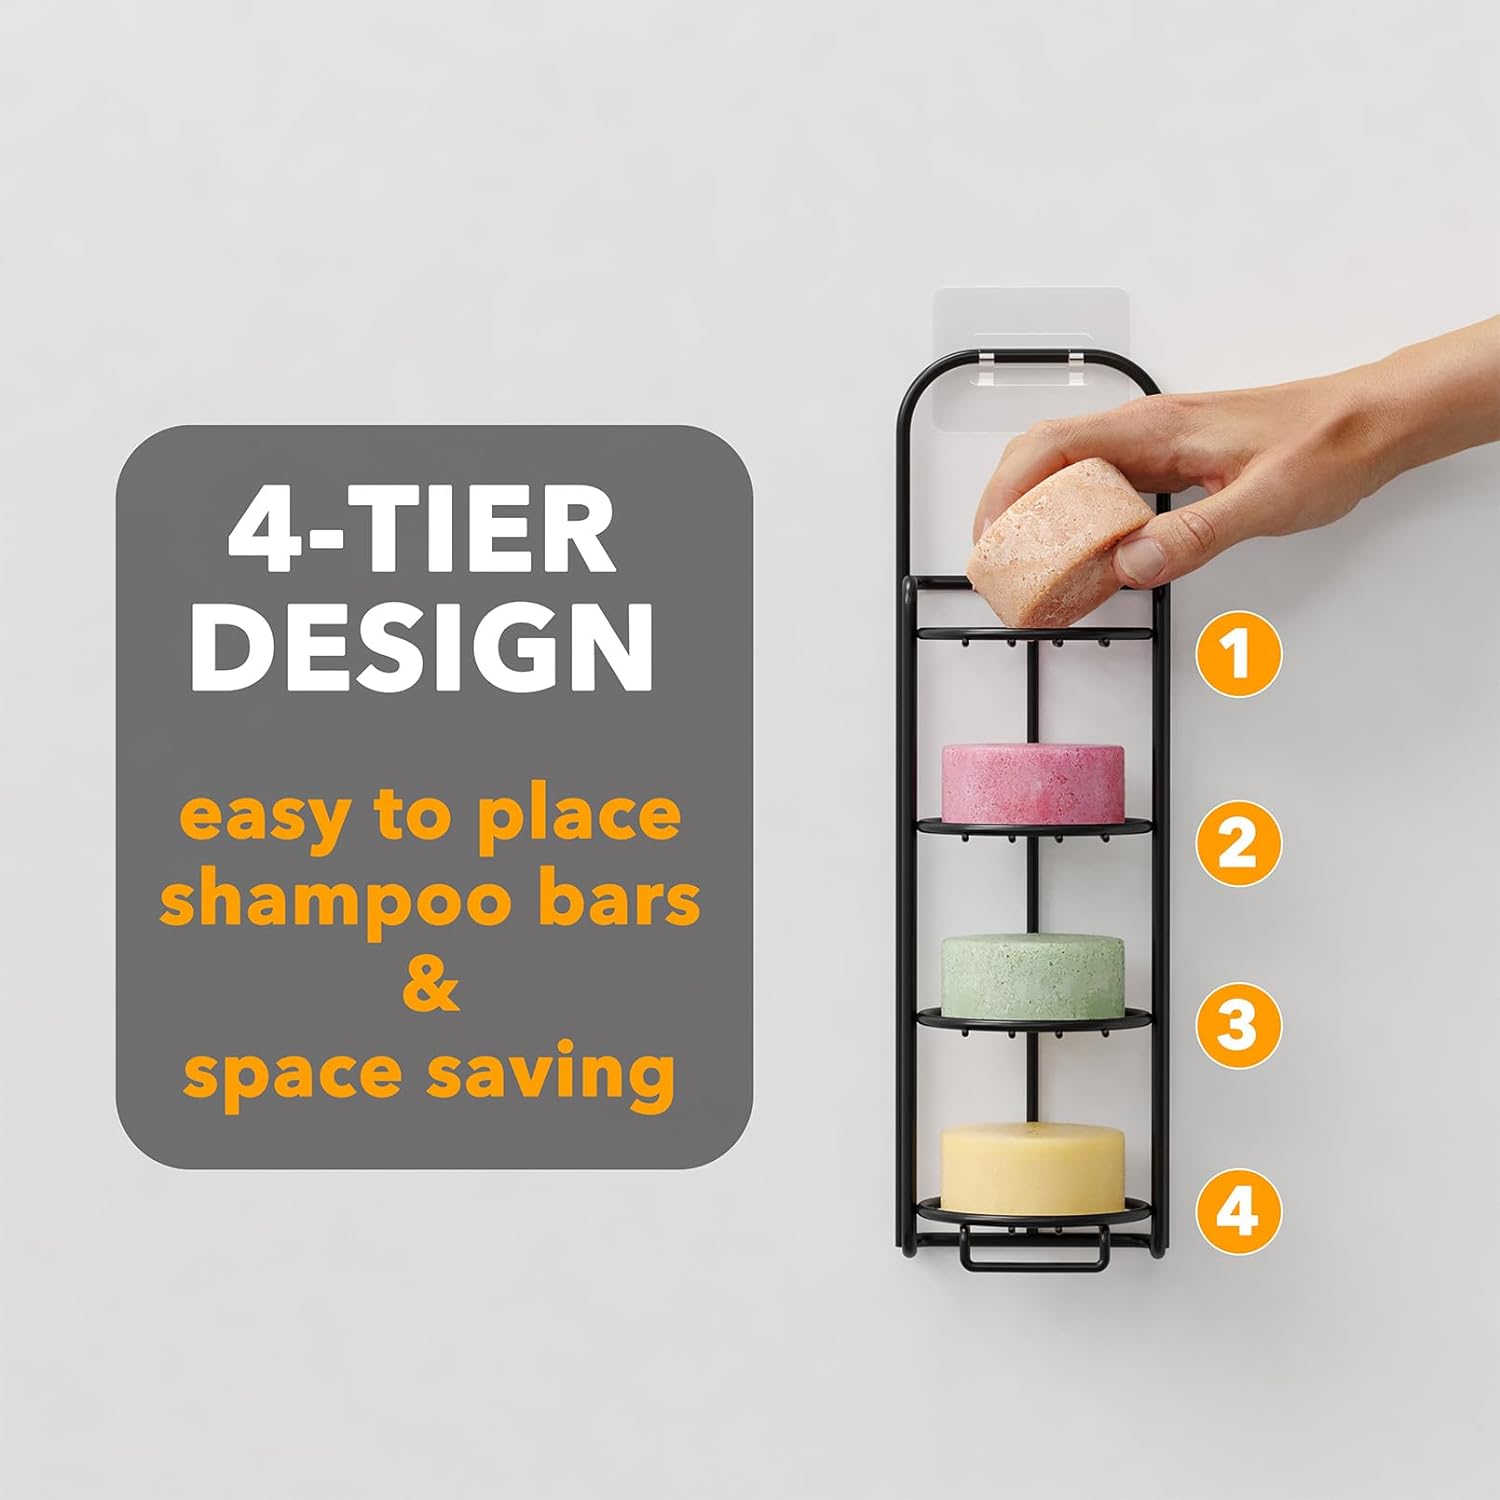 SpaceAid 2 Tier Shampoo Bar Holder for Shower, Self Draining Soap Bar Holders Caddy for Bathroom Wall and Kitchen Sink, Shampoo Bar Dish Rack